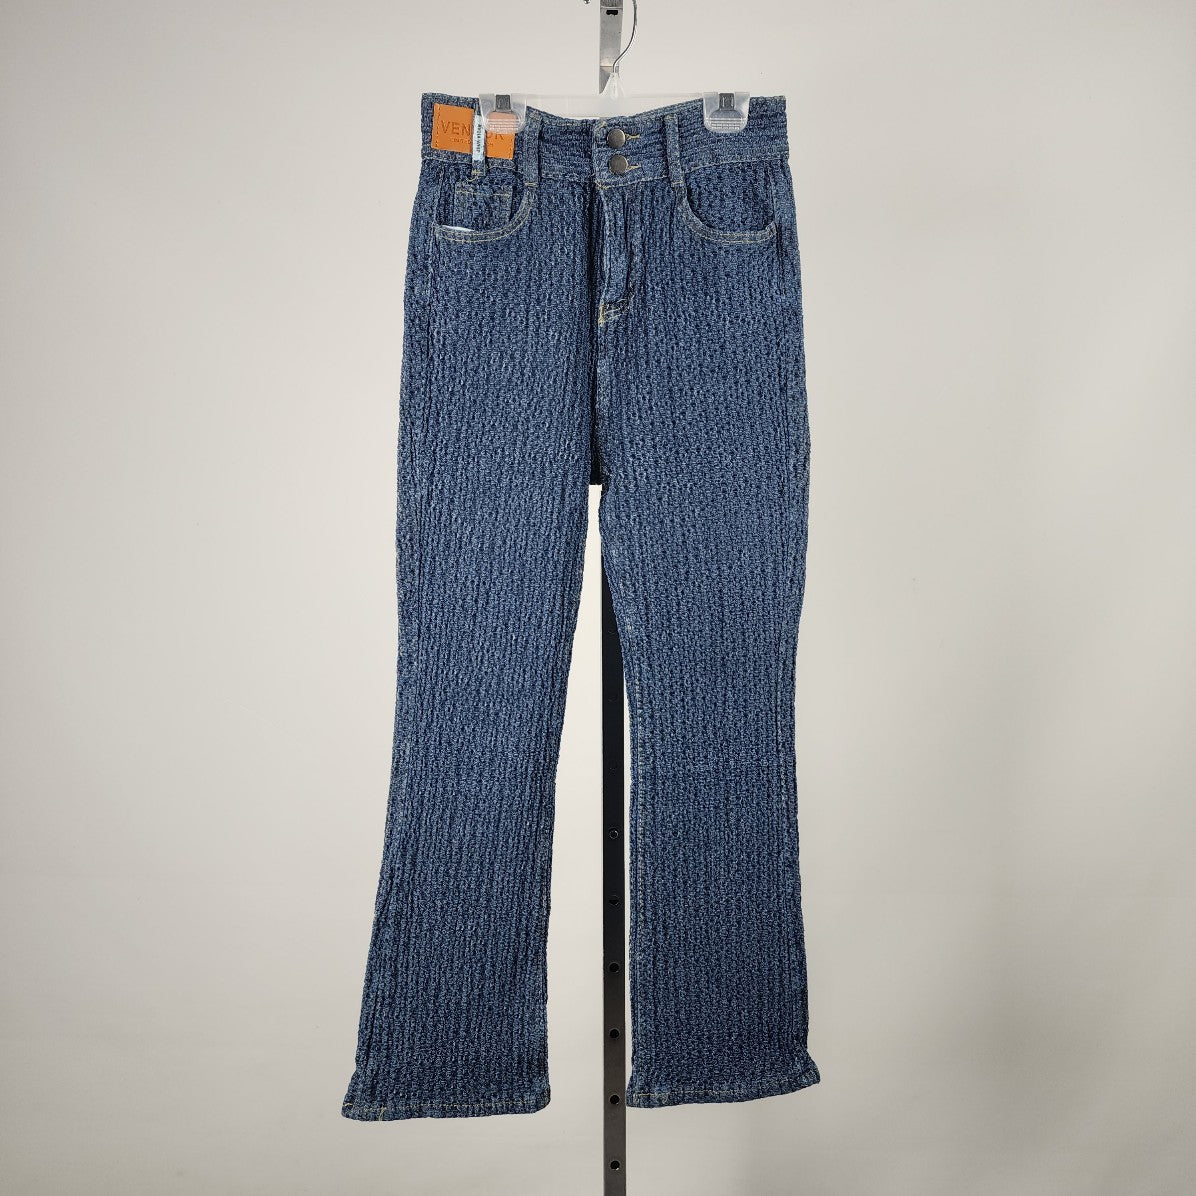 Vendor Smocked Denim Boot Cut Jeans Size S